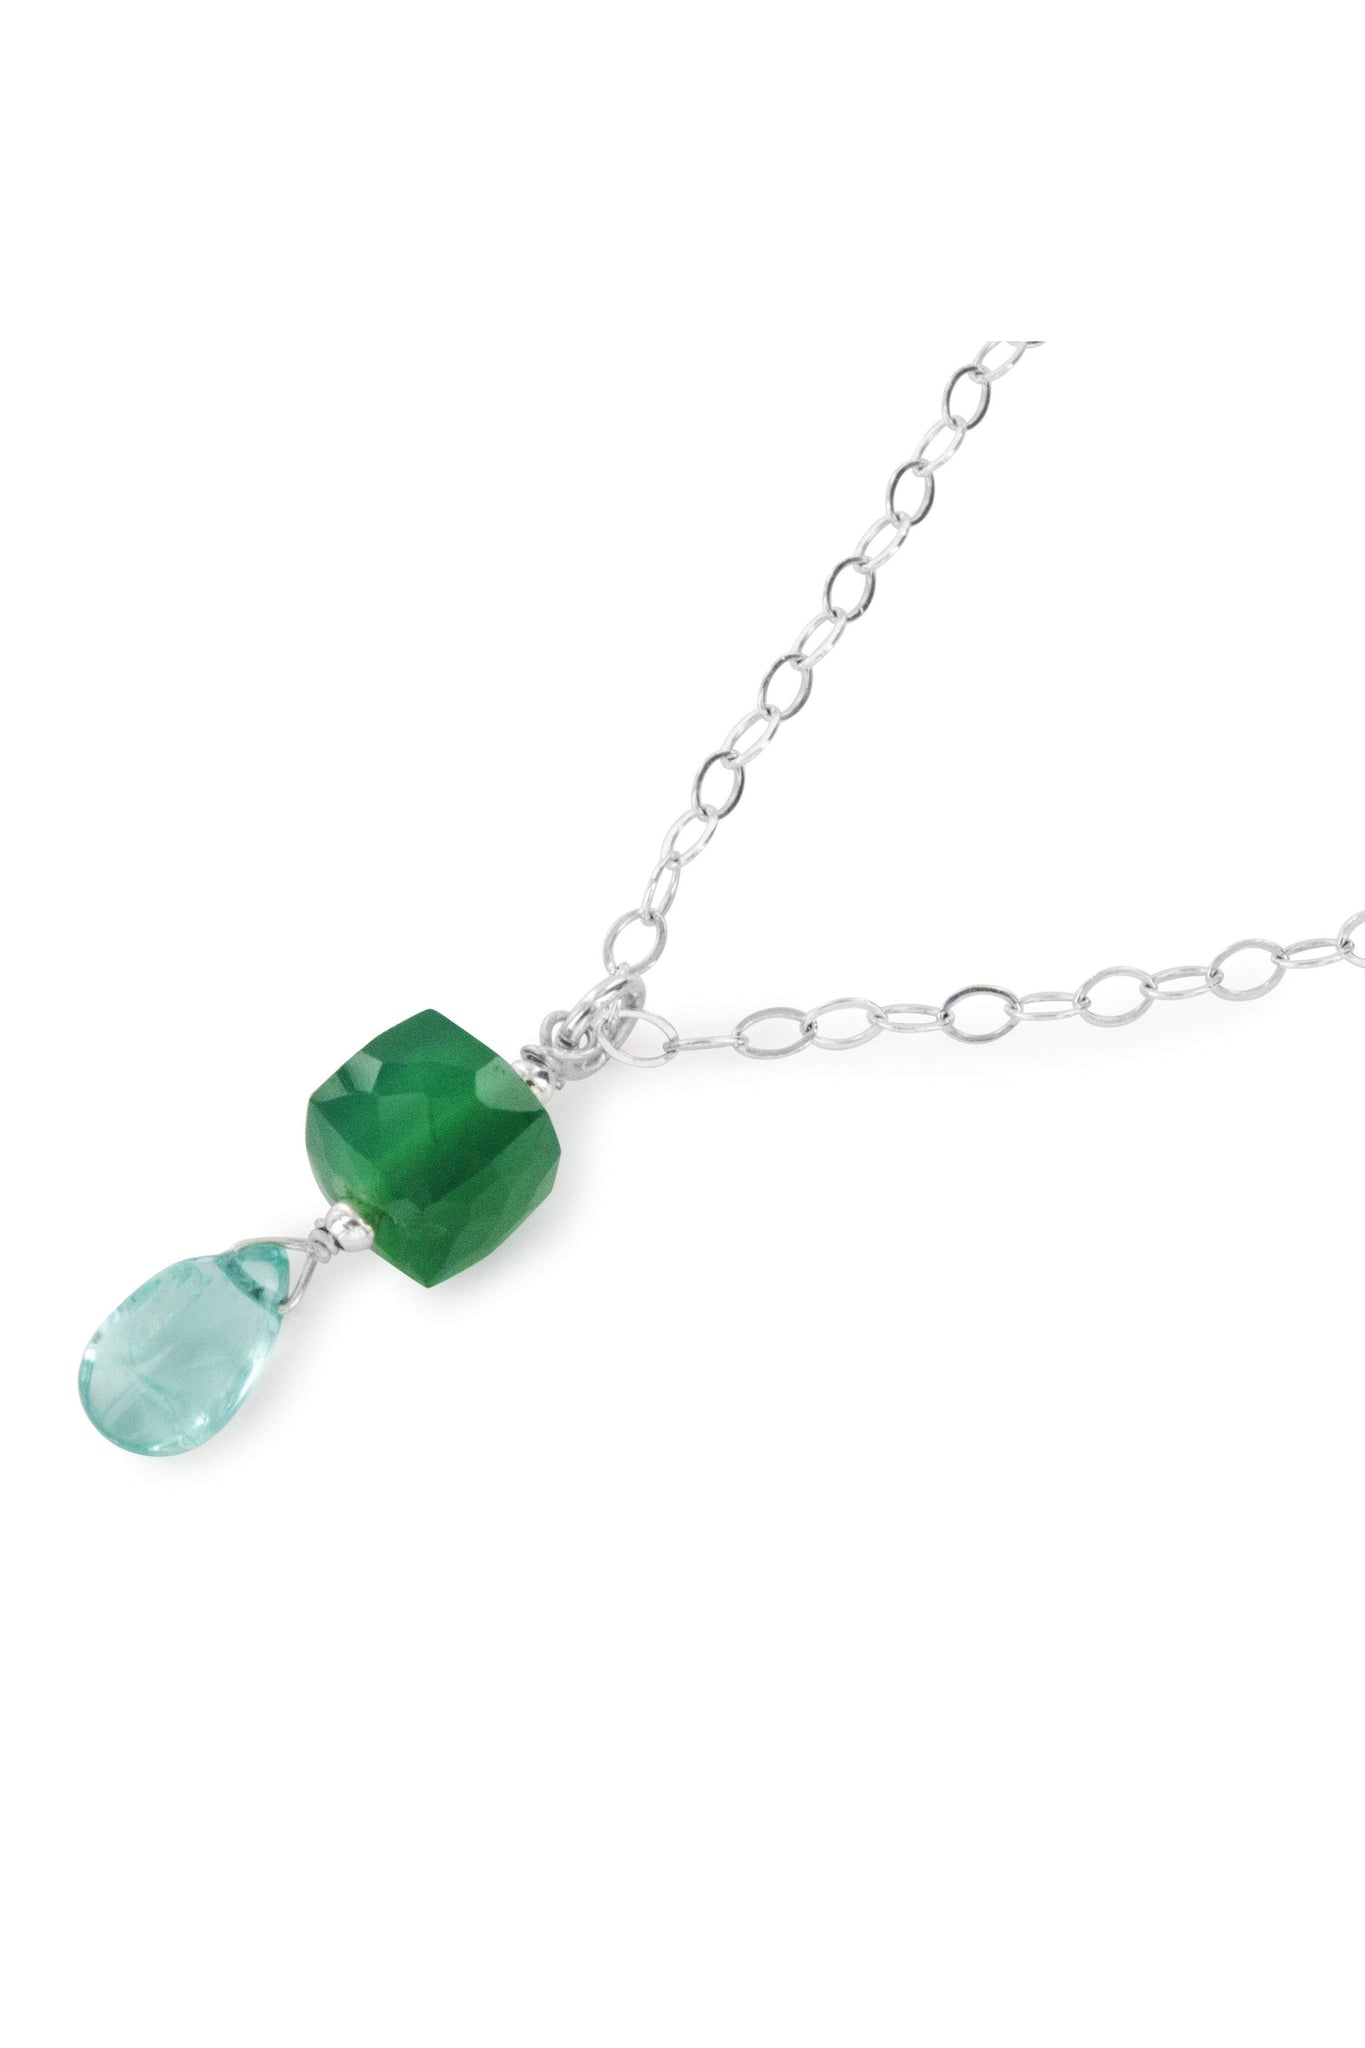 Green Chalcedony, Blue Apatite Gemstone Dainty Necklace